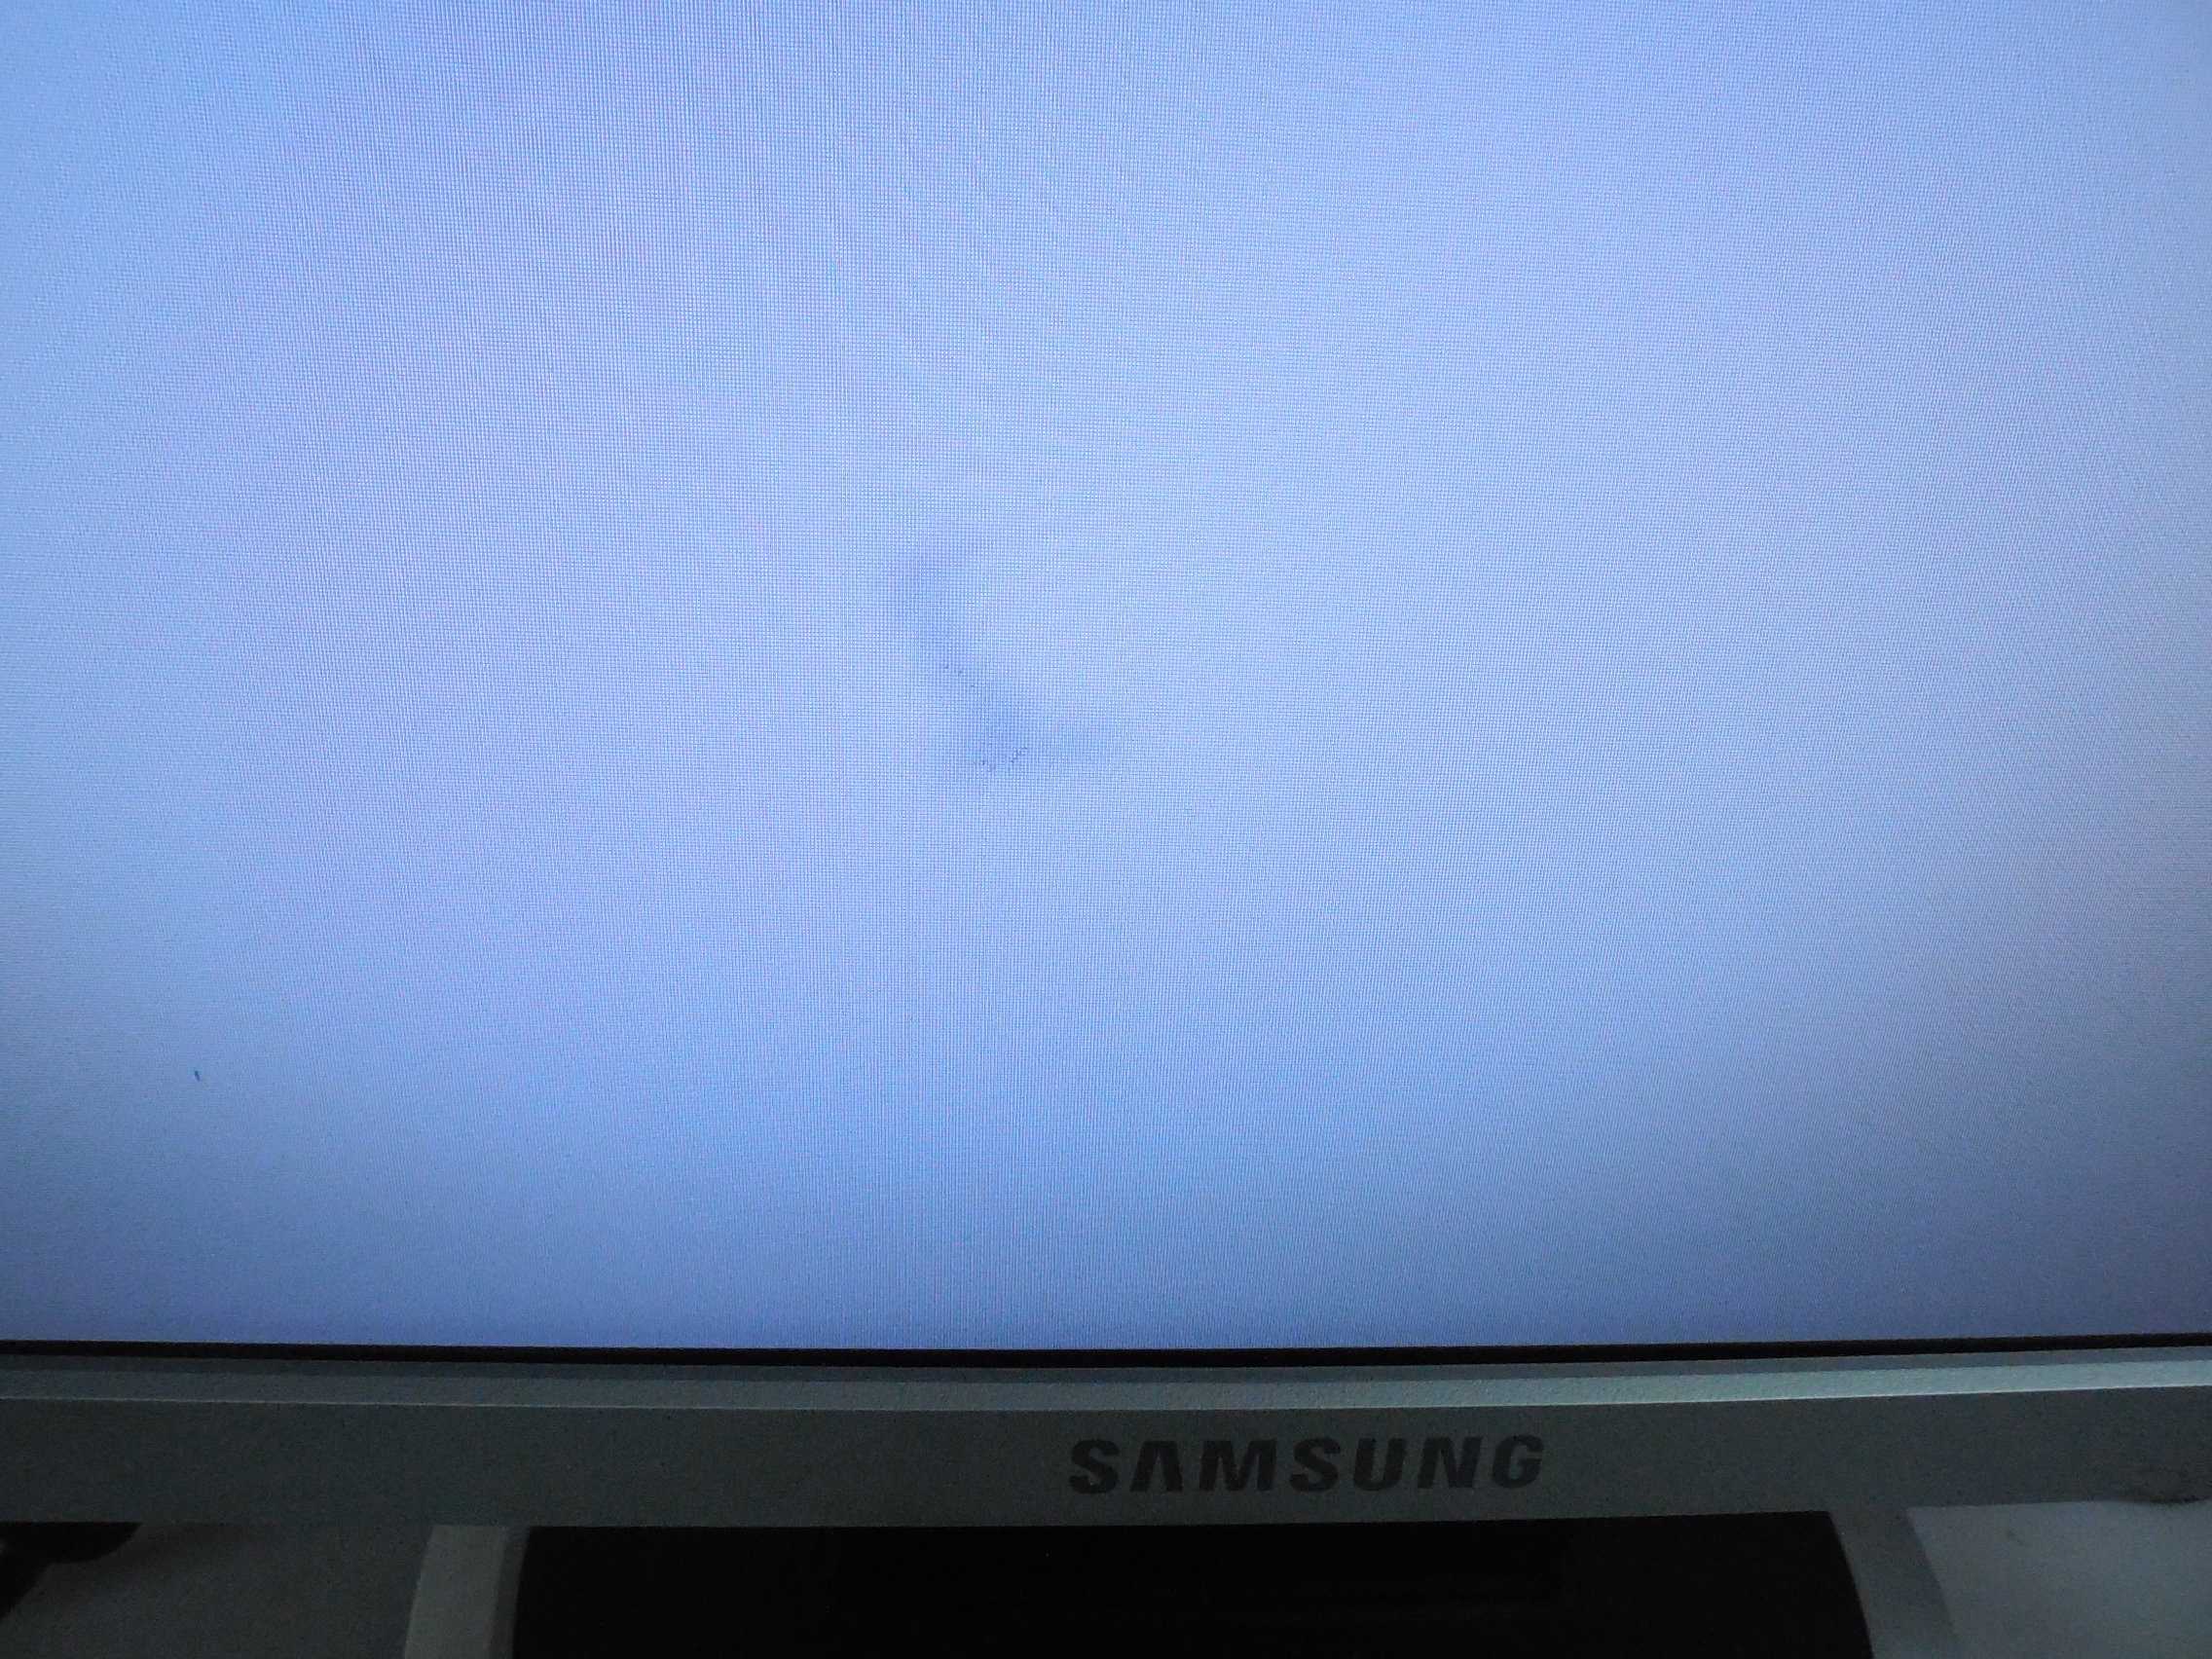 Появился черный экран на мониторе. Пятна самсунг 32 дюйма. Телевизор самсунг ЖК темное пятно ЖК матрица телевизора. Пятна на матрице телевизора Samsung. Темные пятна на телевизоре Samsung.